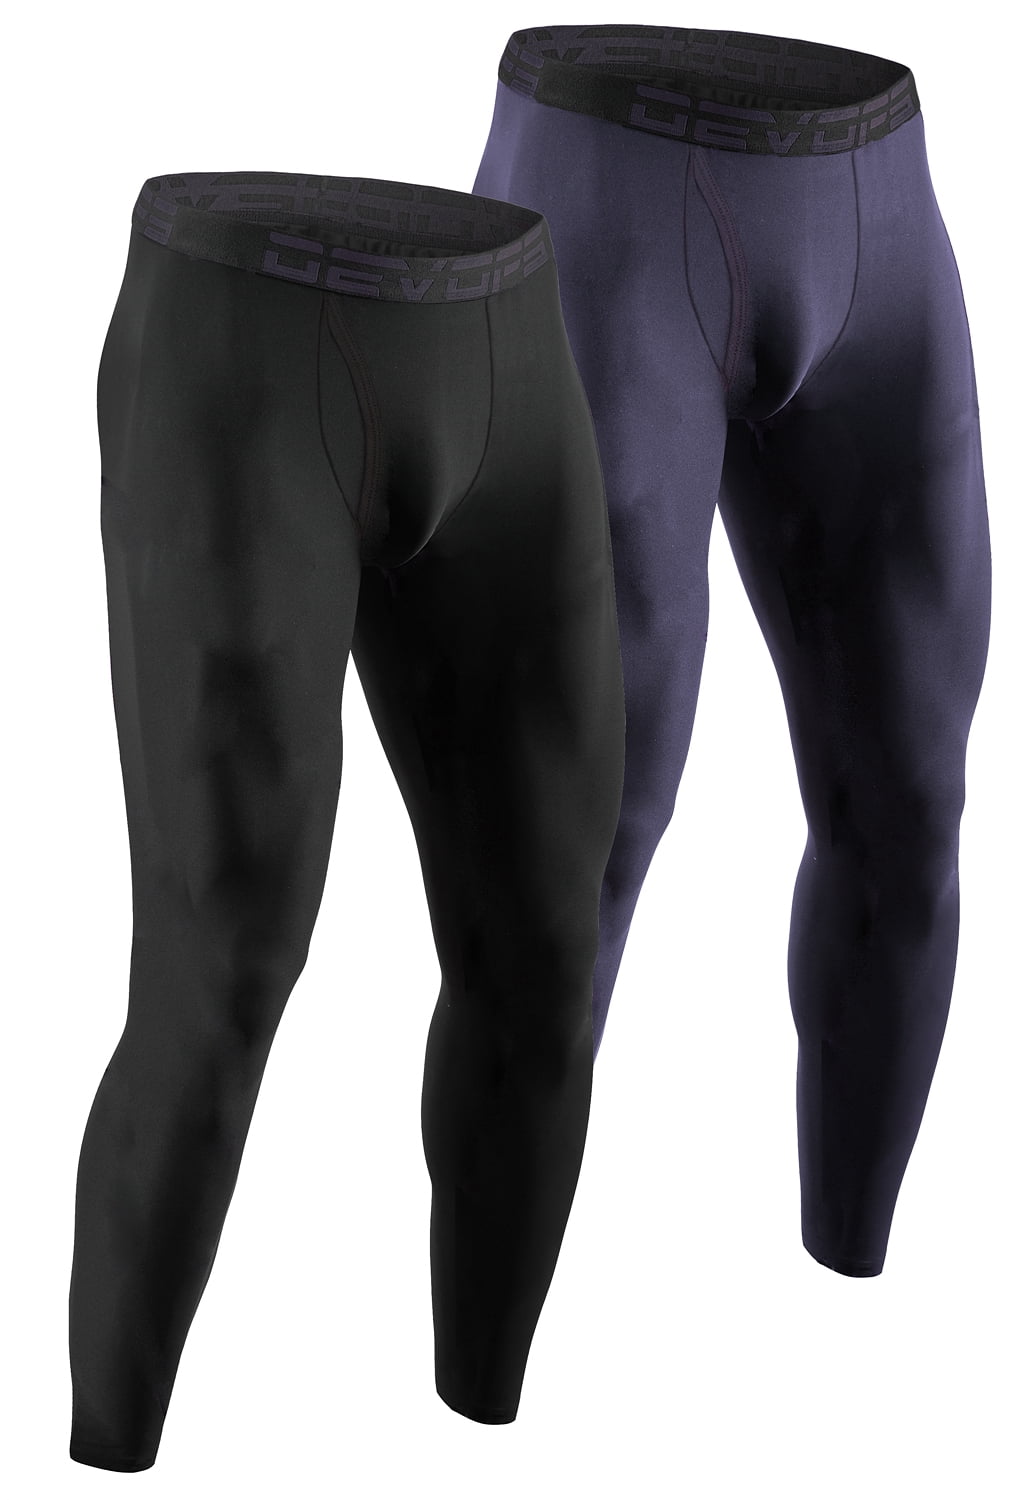 32 DEGREES Men's Heat Performance Thermal Baselayer Pants 2-Pack